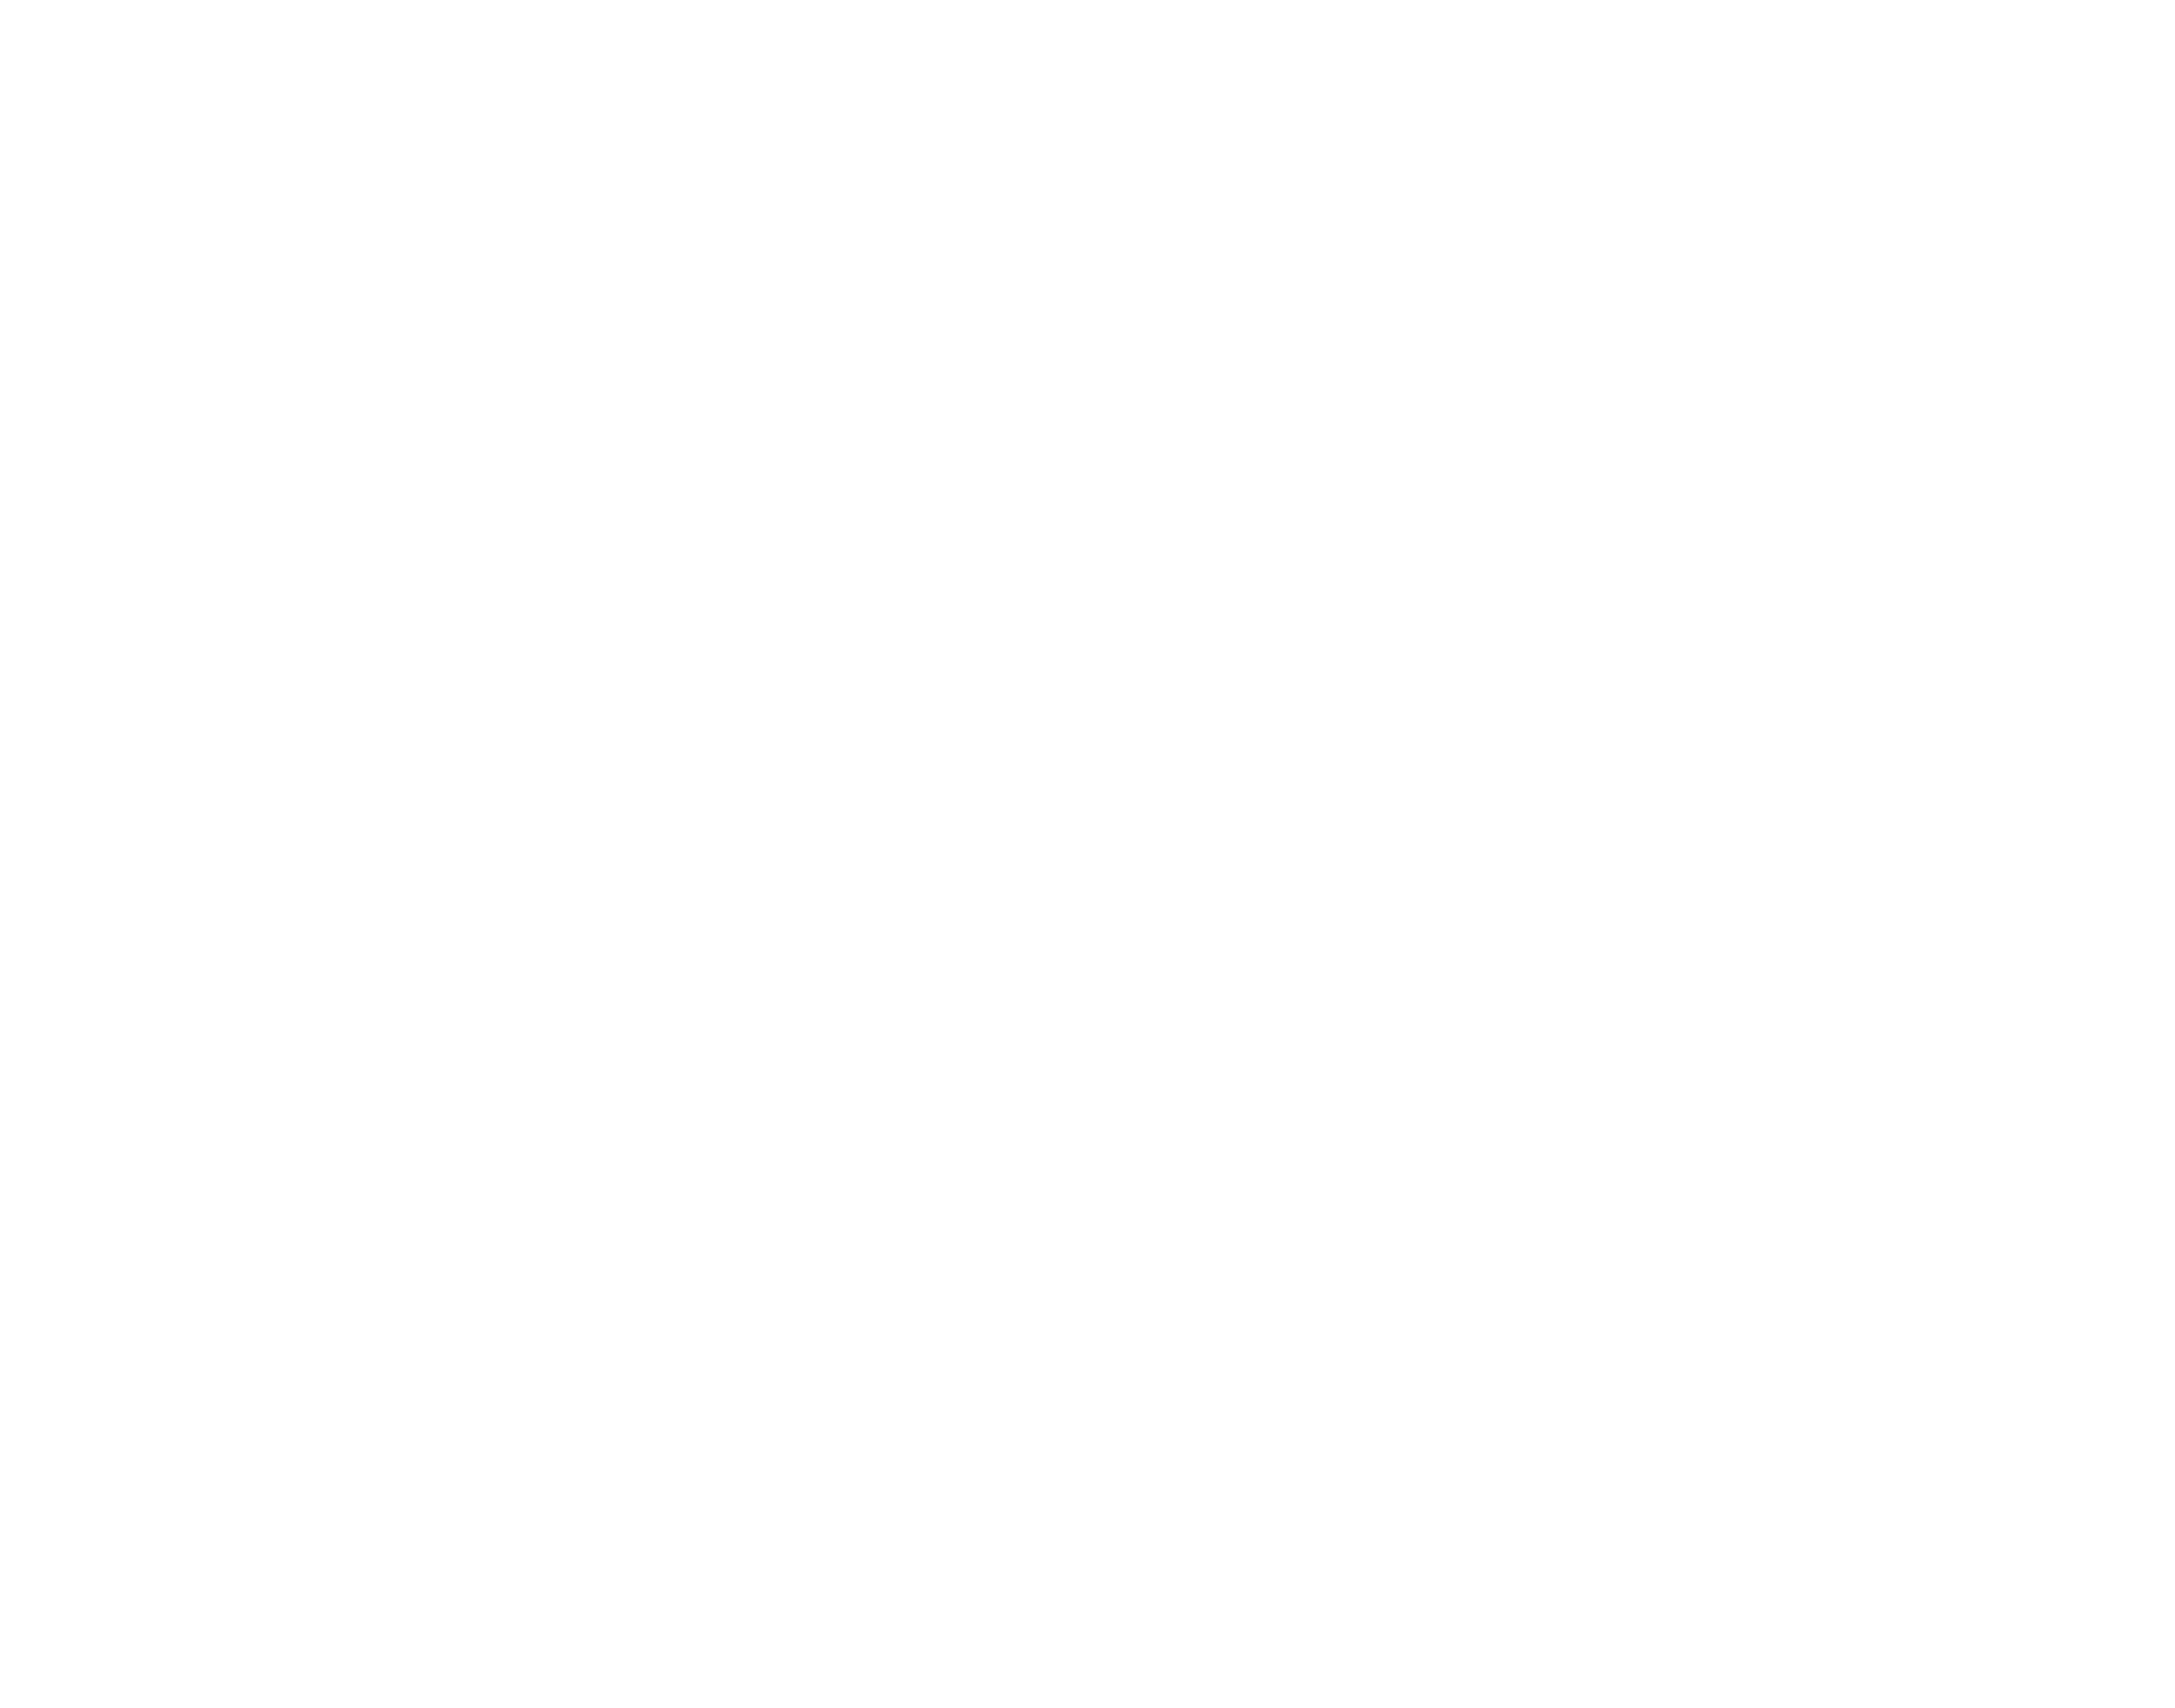 NIssanpedia